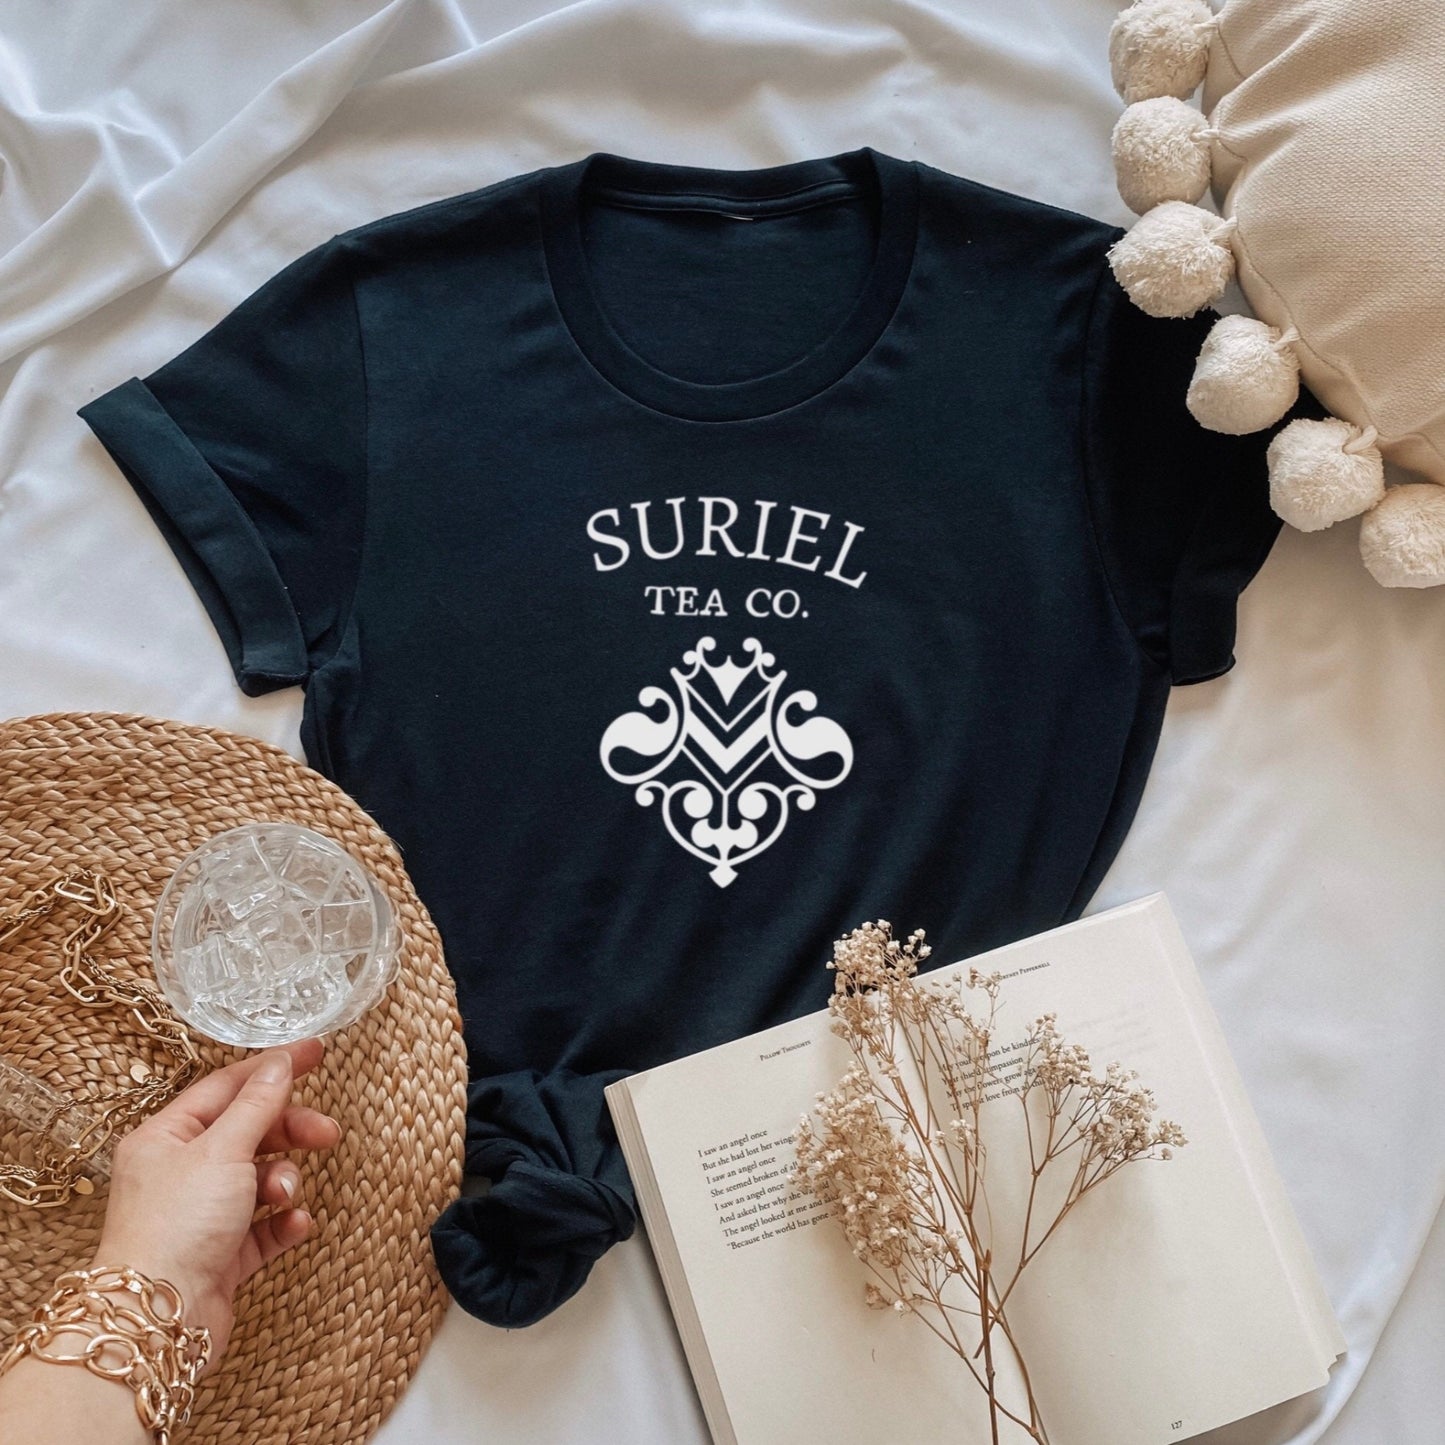 ACOTAR Suriel tea co crewneck t-shirt  - officially licensed by Sarah J. Maas